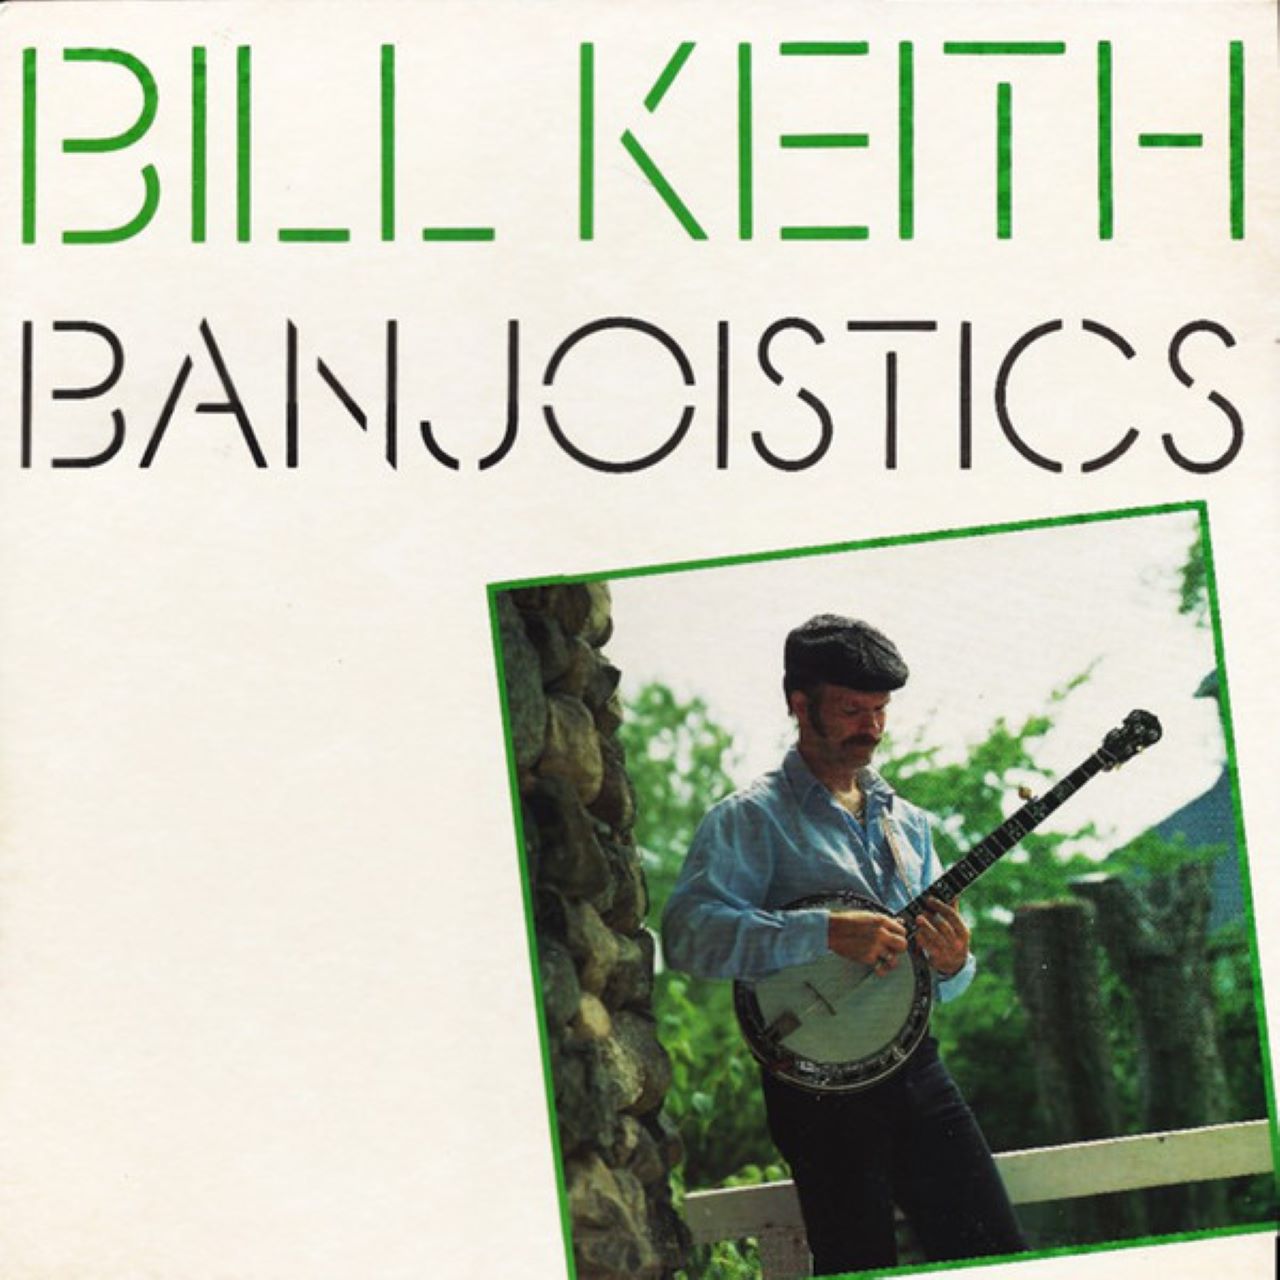 Bill Keith - Banjoistics cover album